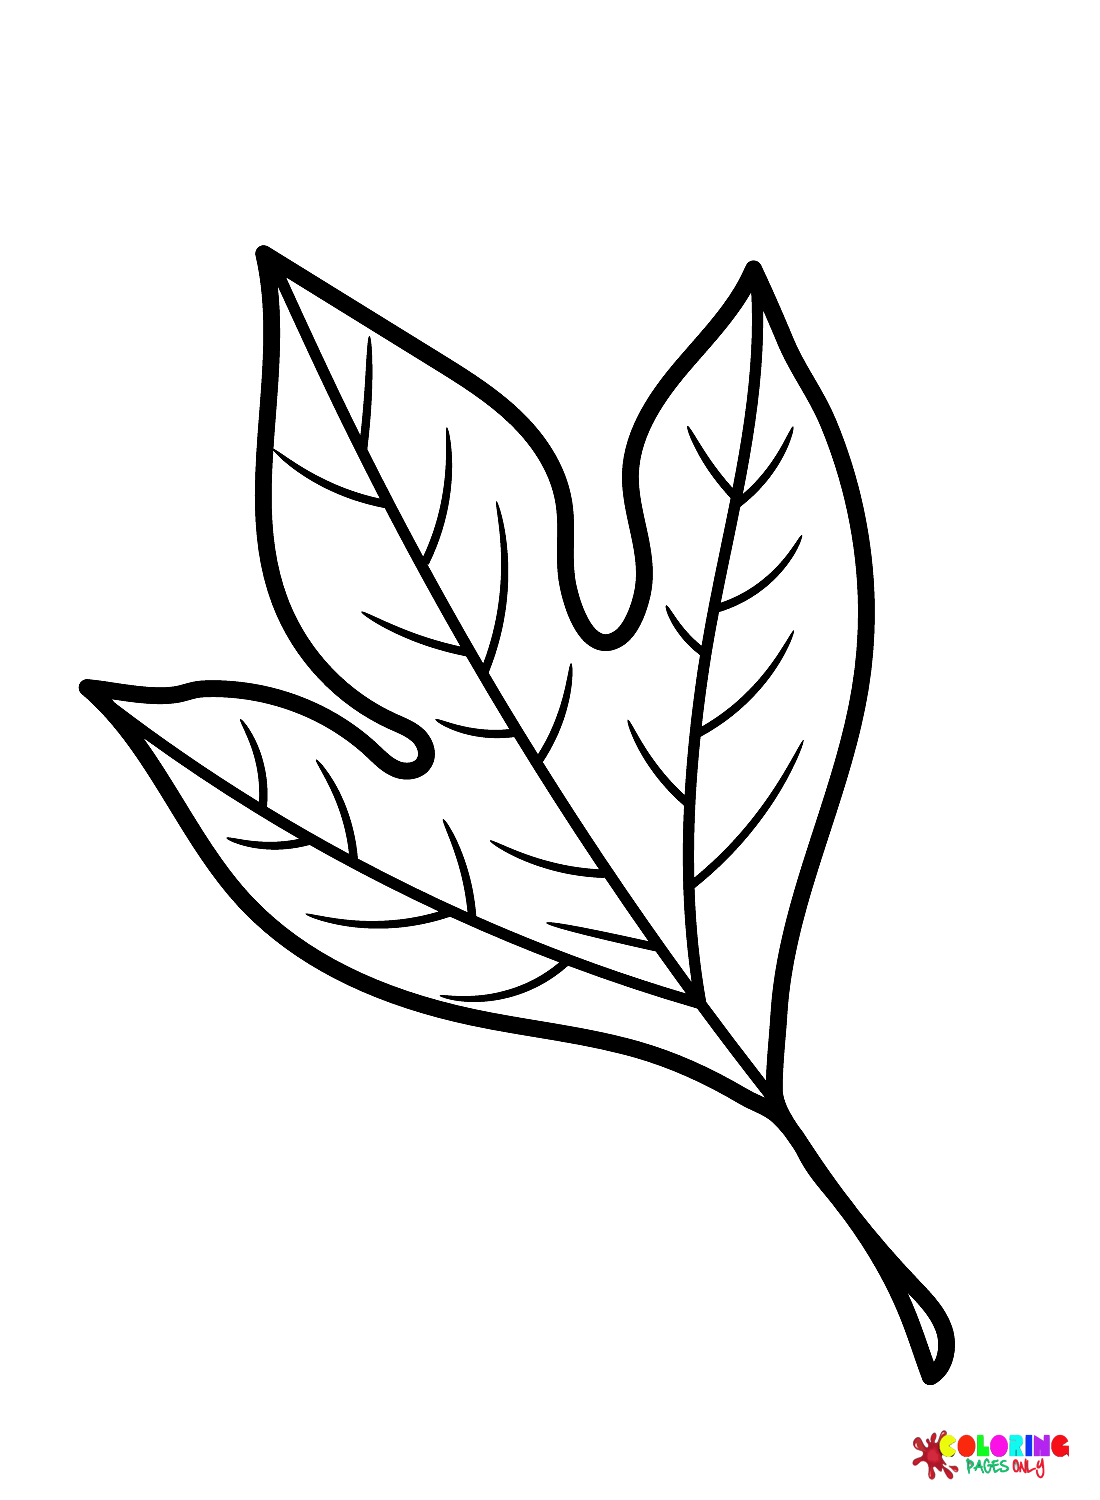 Página para colorir folha de sassafrás